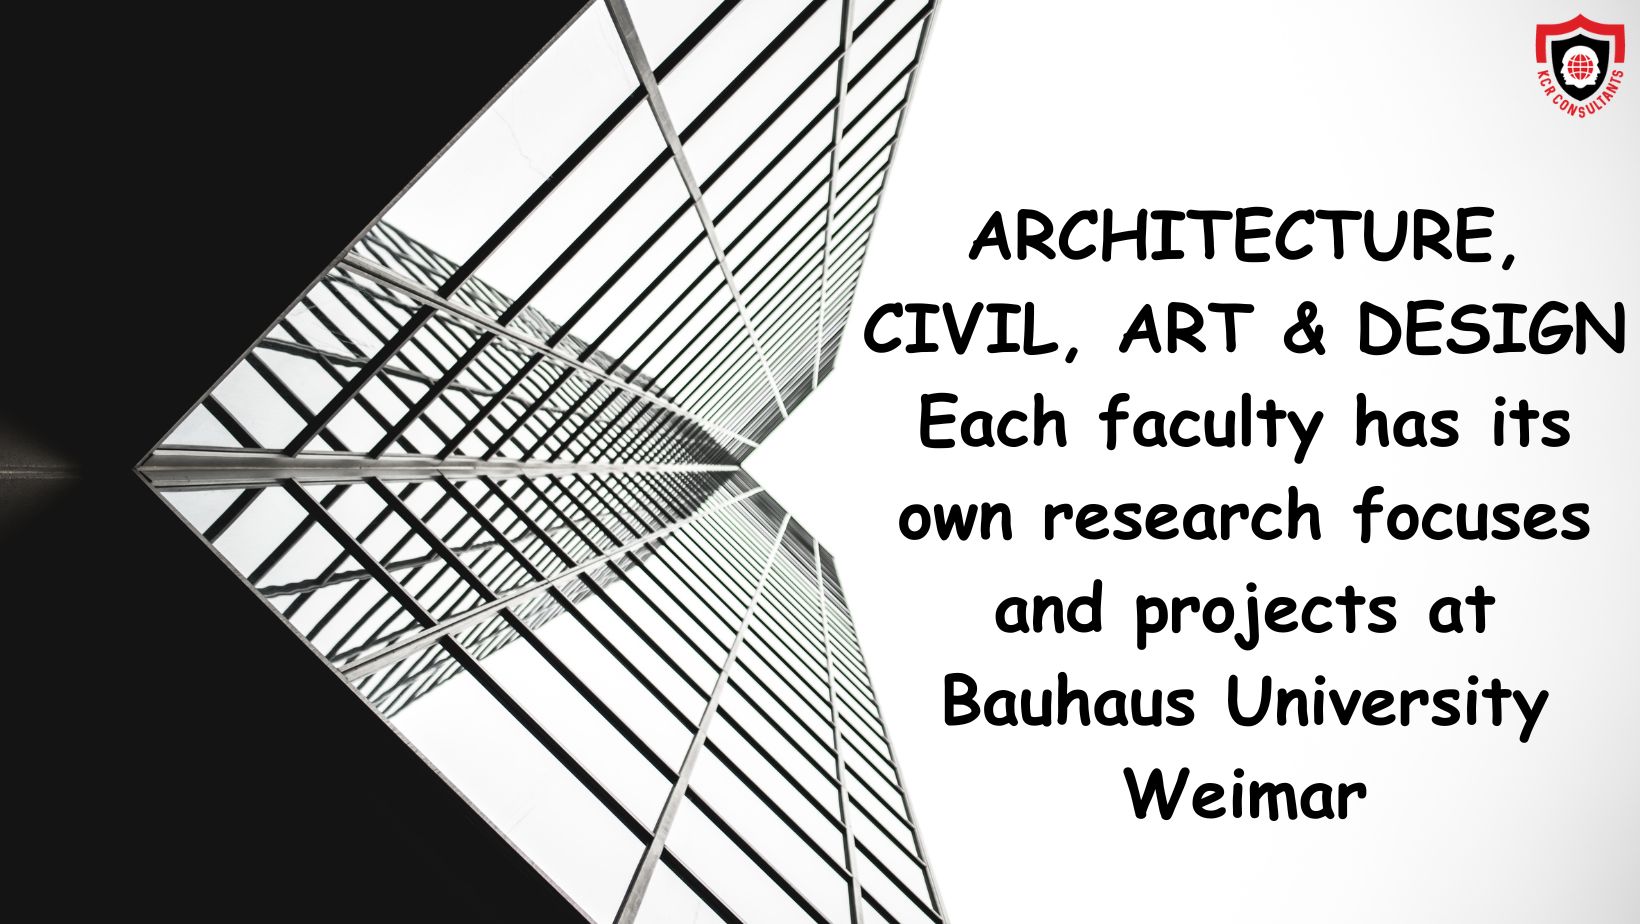 Bauhaus University Weimar - Research focus